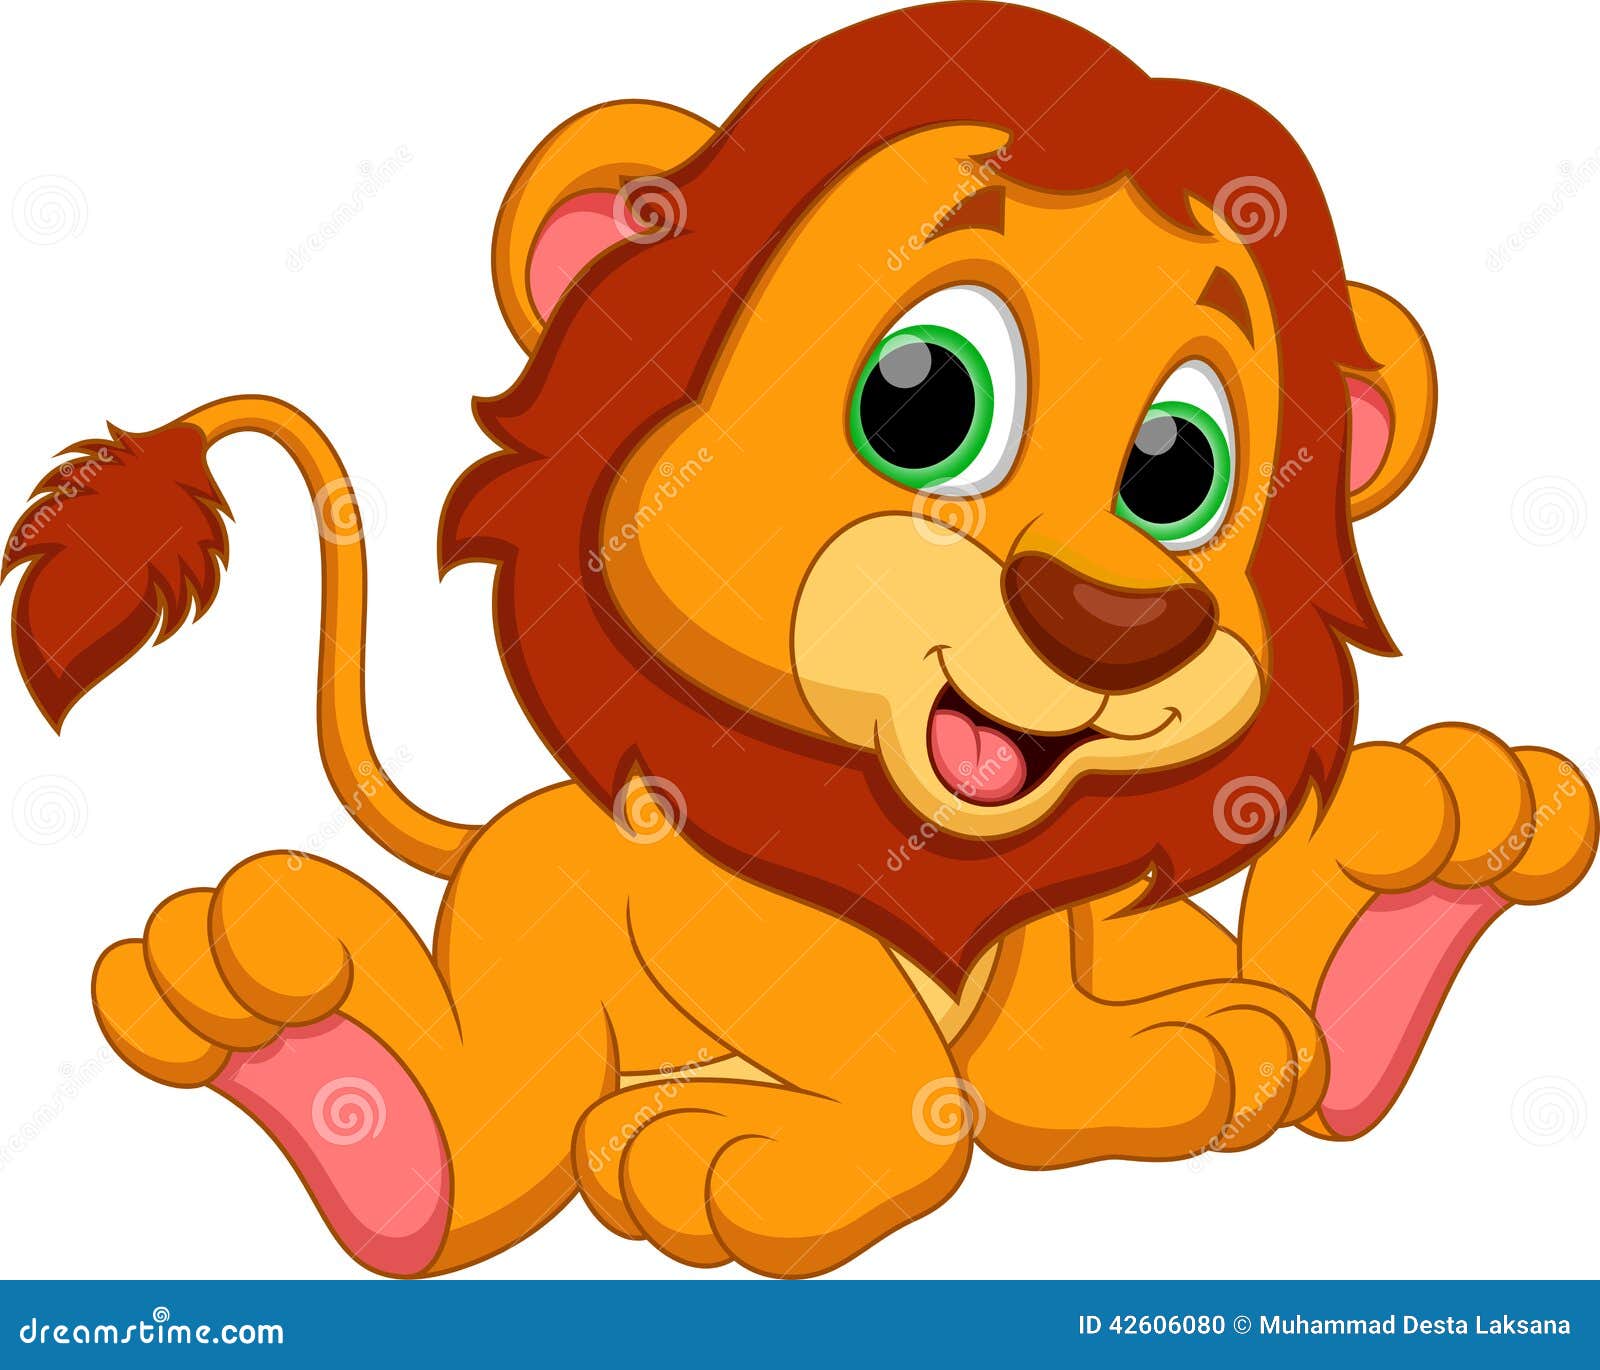 Lion cartoon stock illustration. Illustration of graphic - 42606080